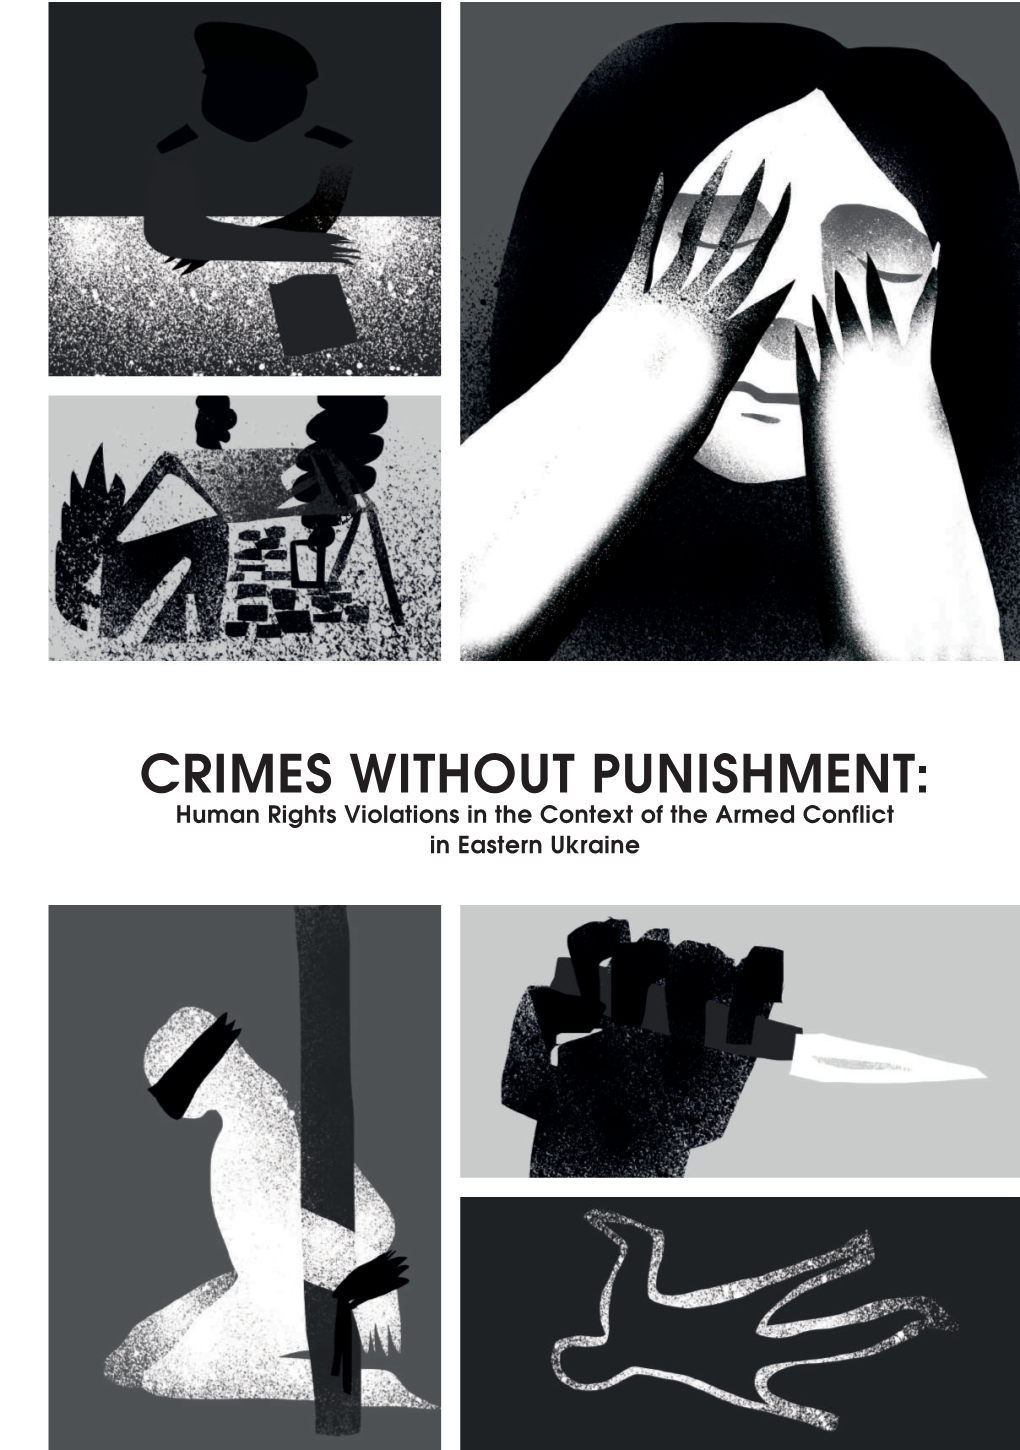 Crimes Without Punishment